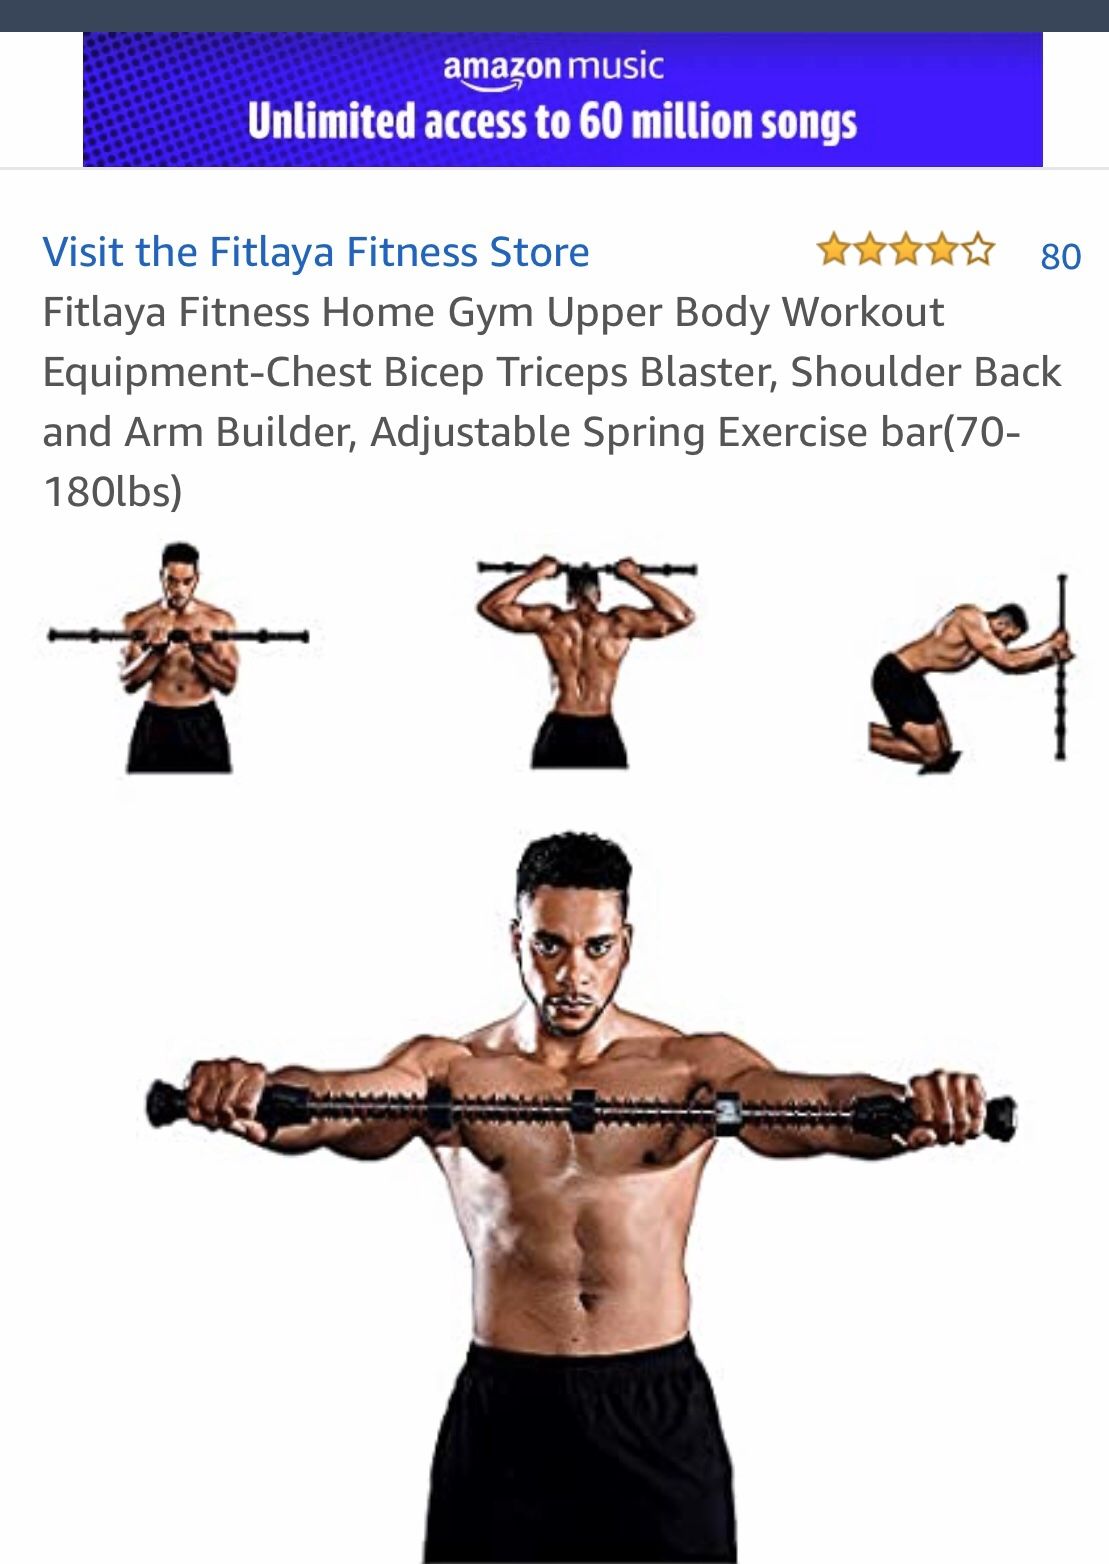 Fitlaya Fitness Home Gym Upper Body Workout Equipment-Chest Bicep Triceps Blaster, Shoulder Back and Arm Builder, Adjustable Spring Exercise bar(70-1